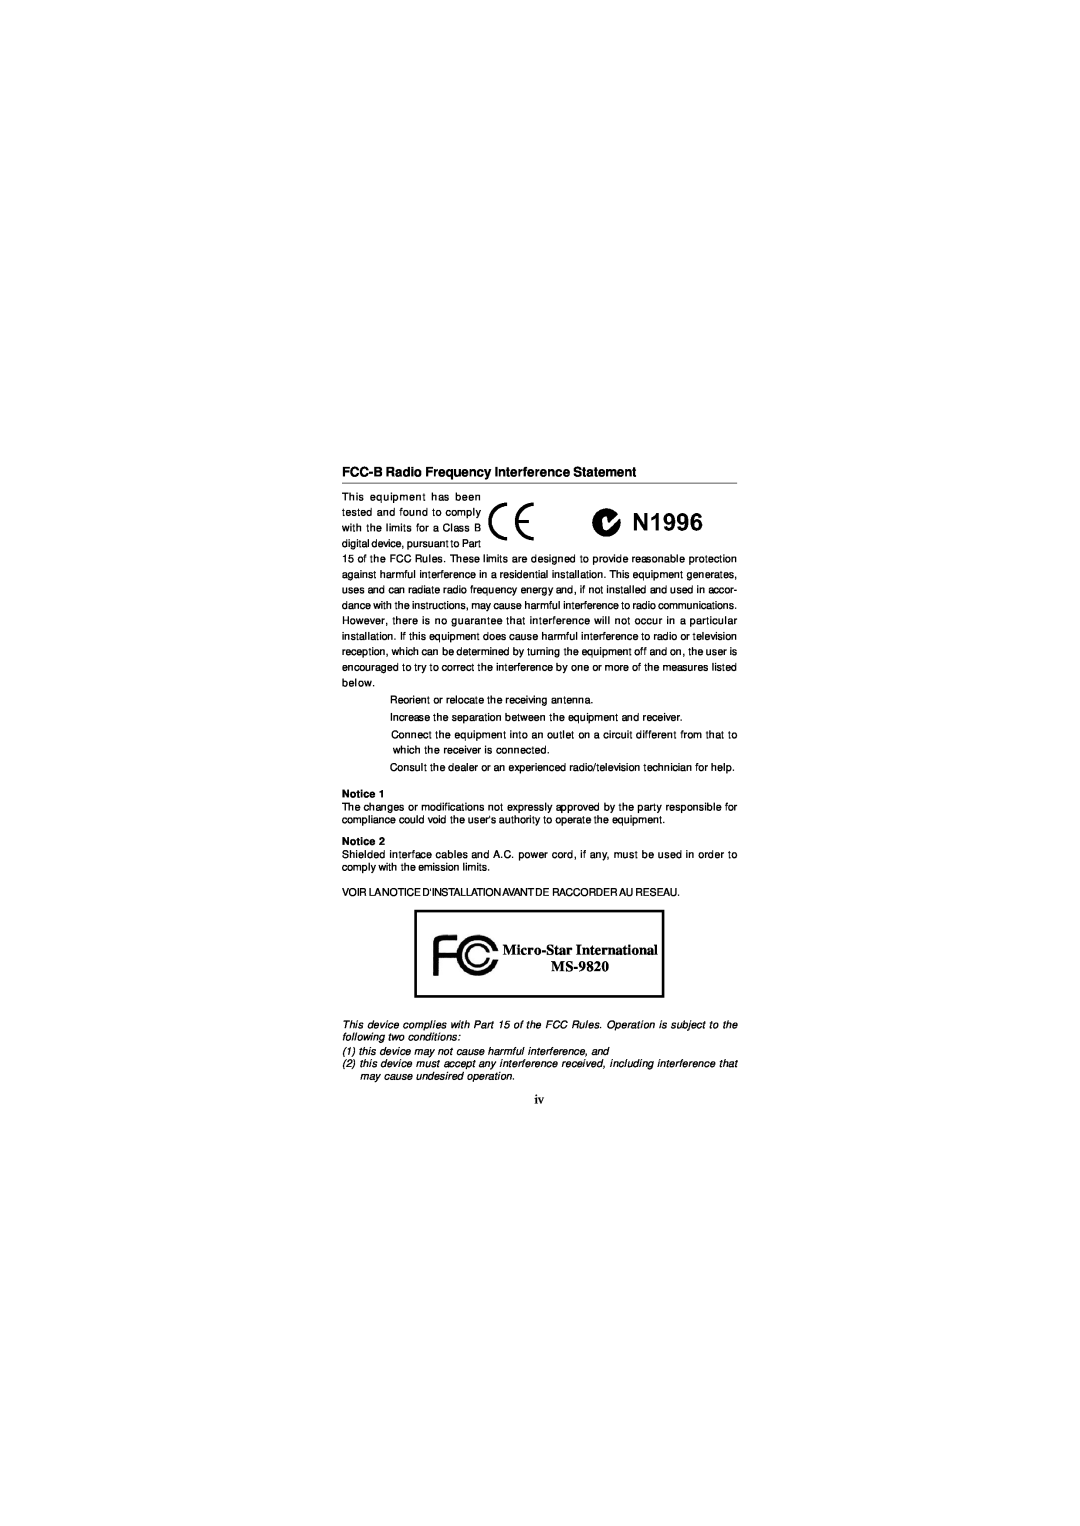 Intel IM-Q35 Series manual FCC-B Radio Frequency Interference Statement, Micro-Star International MS-9820 